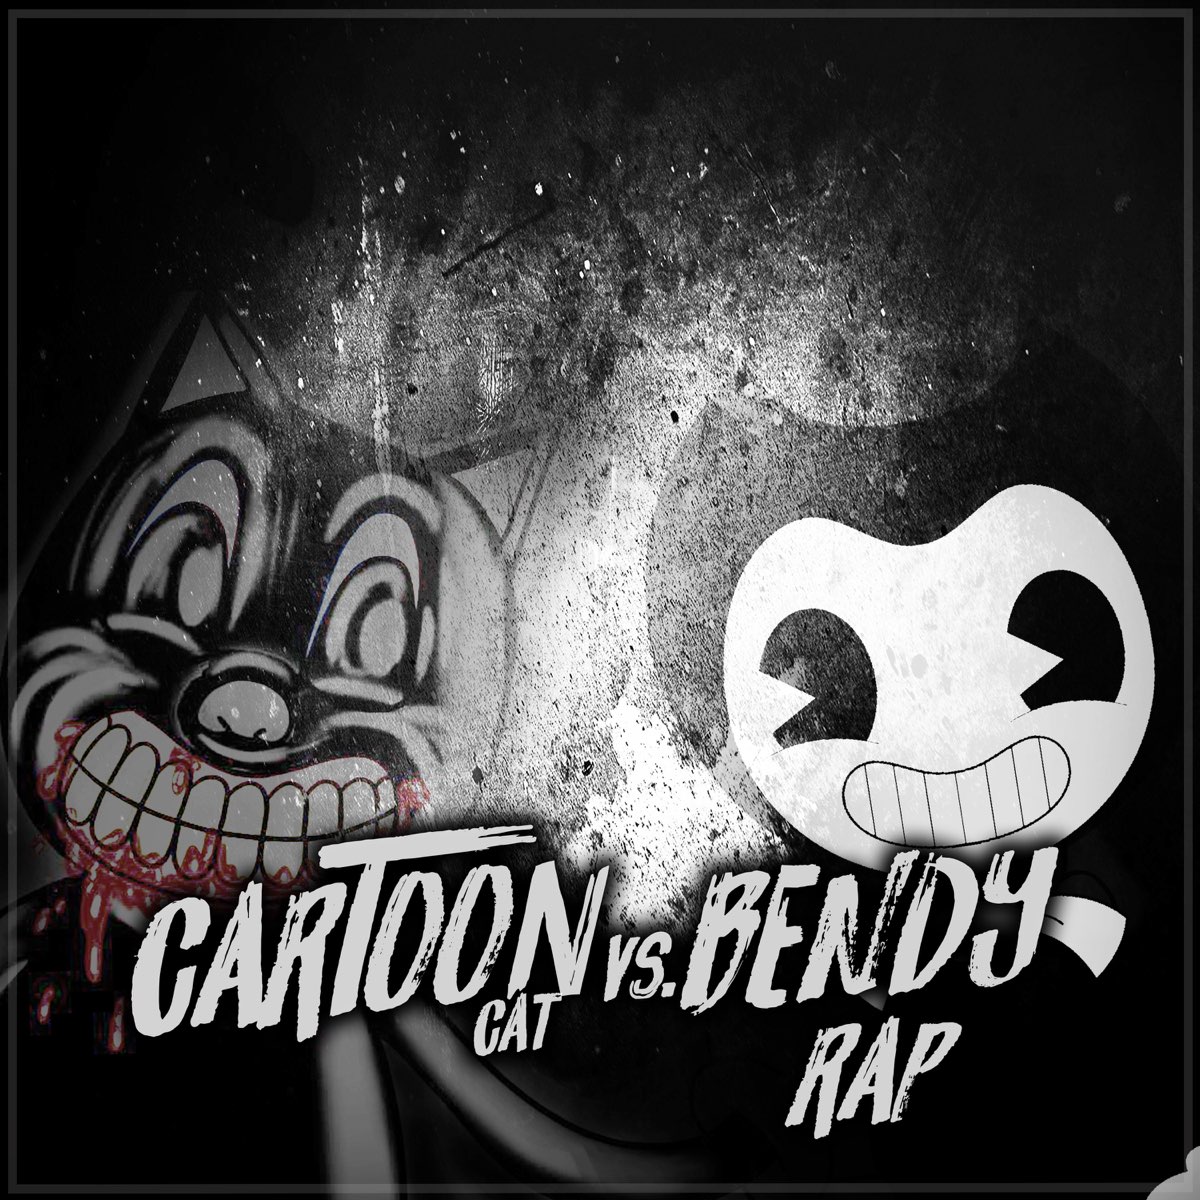 Garten of BanBan 3 (feat. Hollywood Legend) - Single - Album by